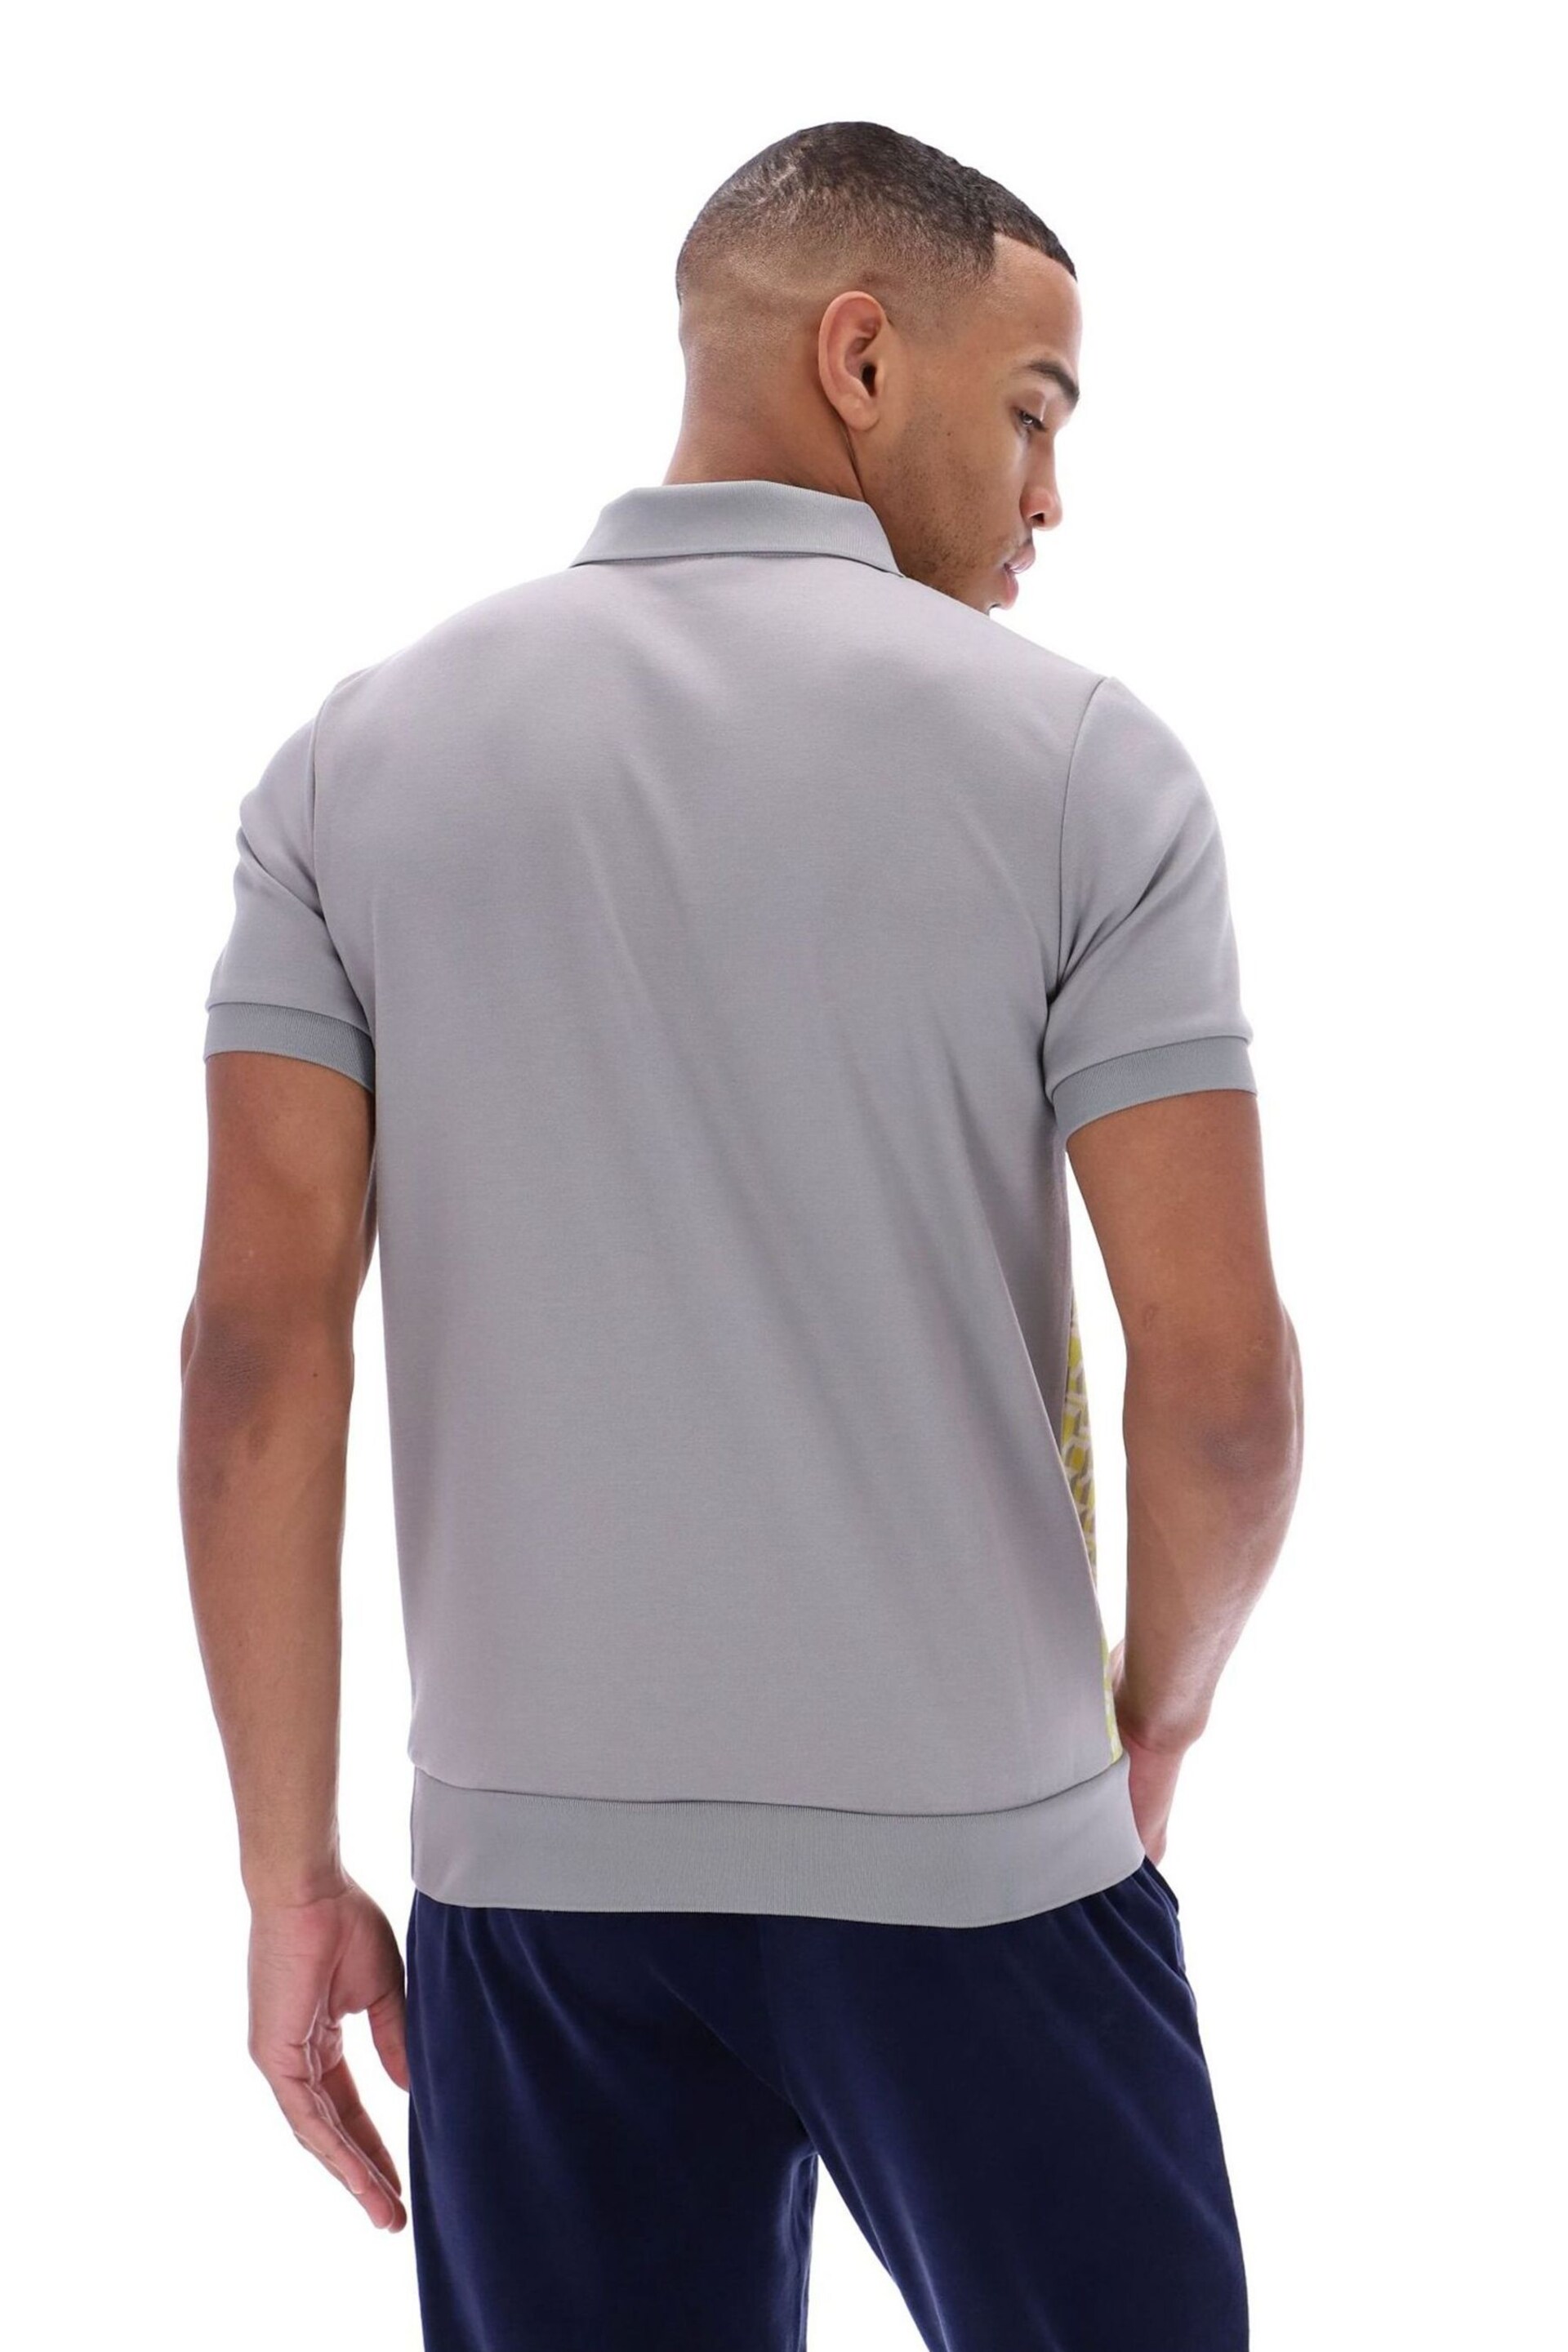 Fila Grey Axel Geo Jacquard Polo Shirt - Image 3 of 5